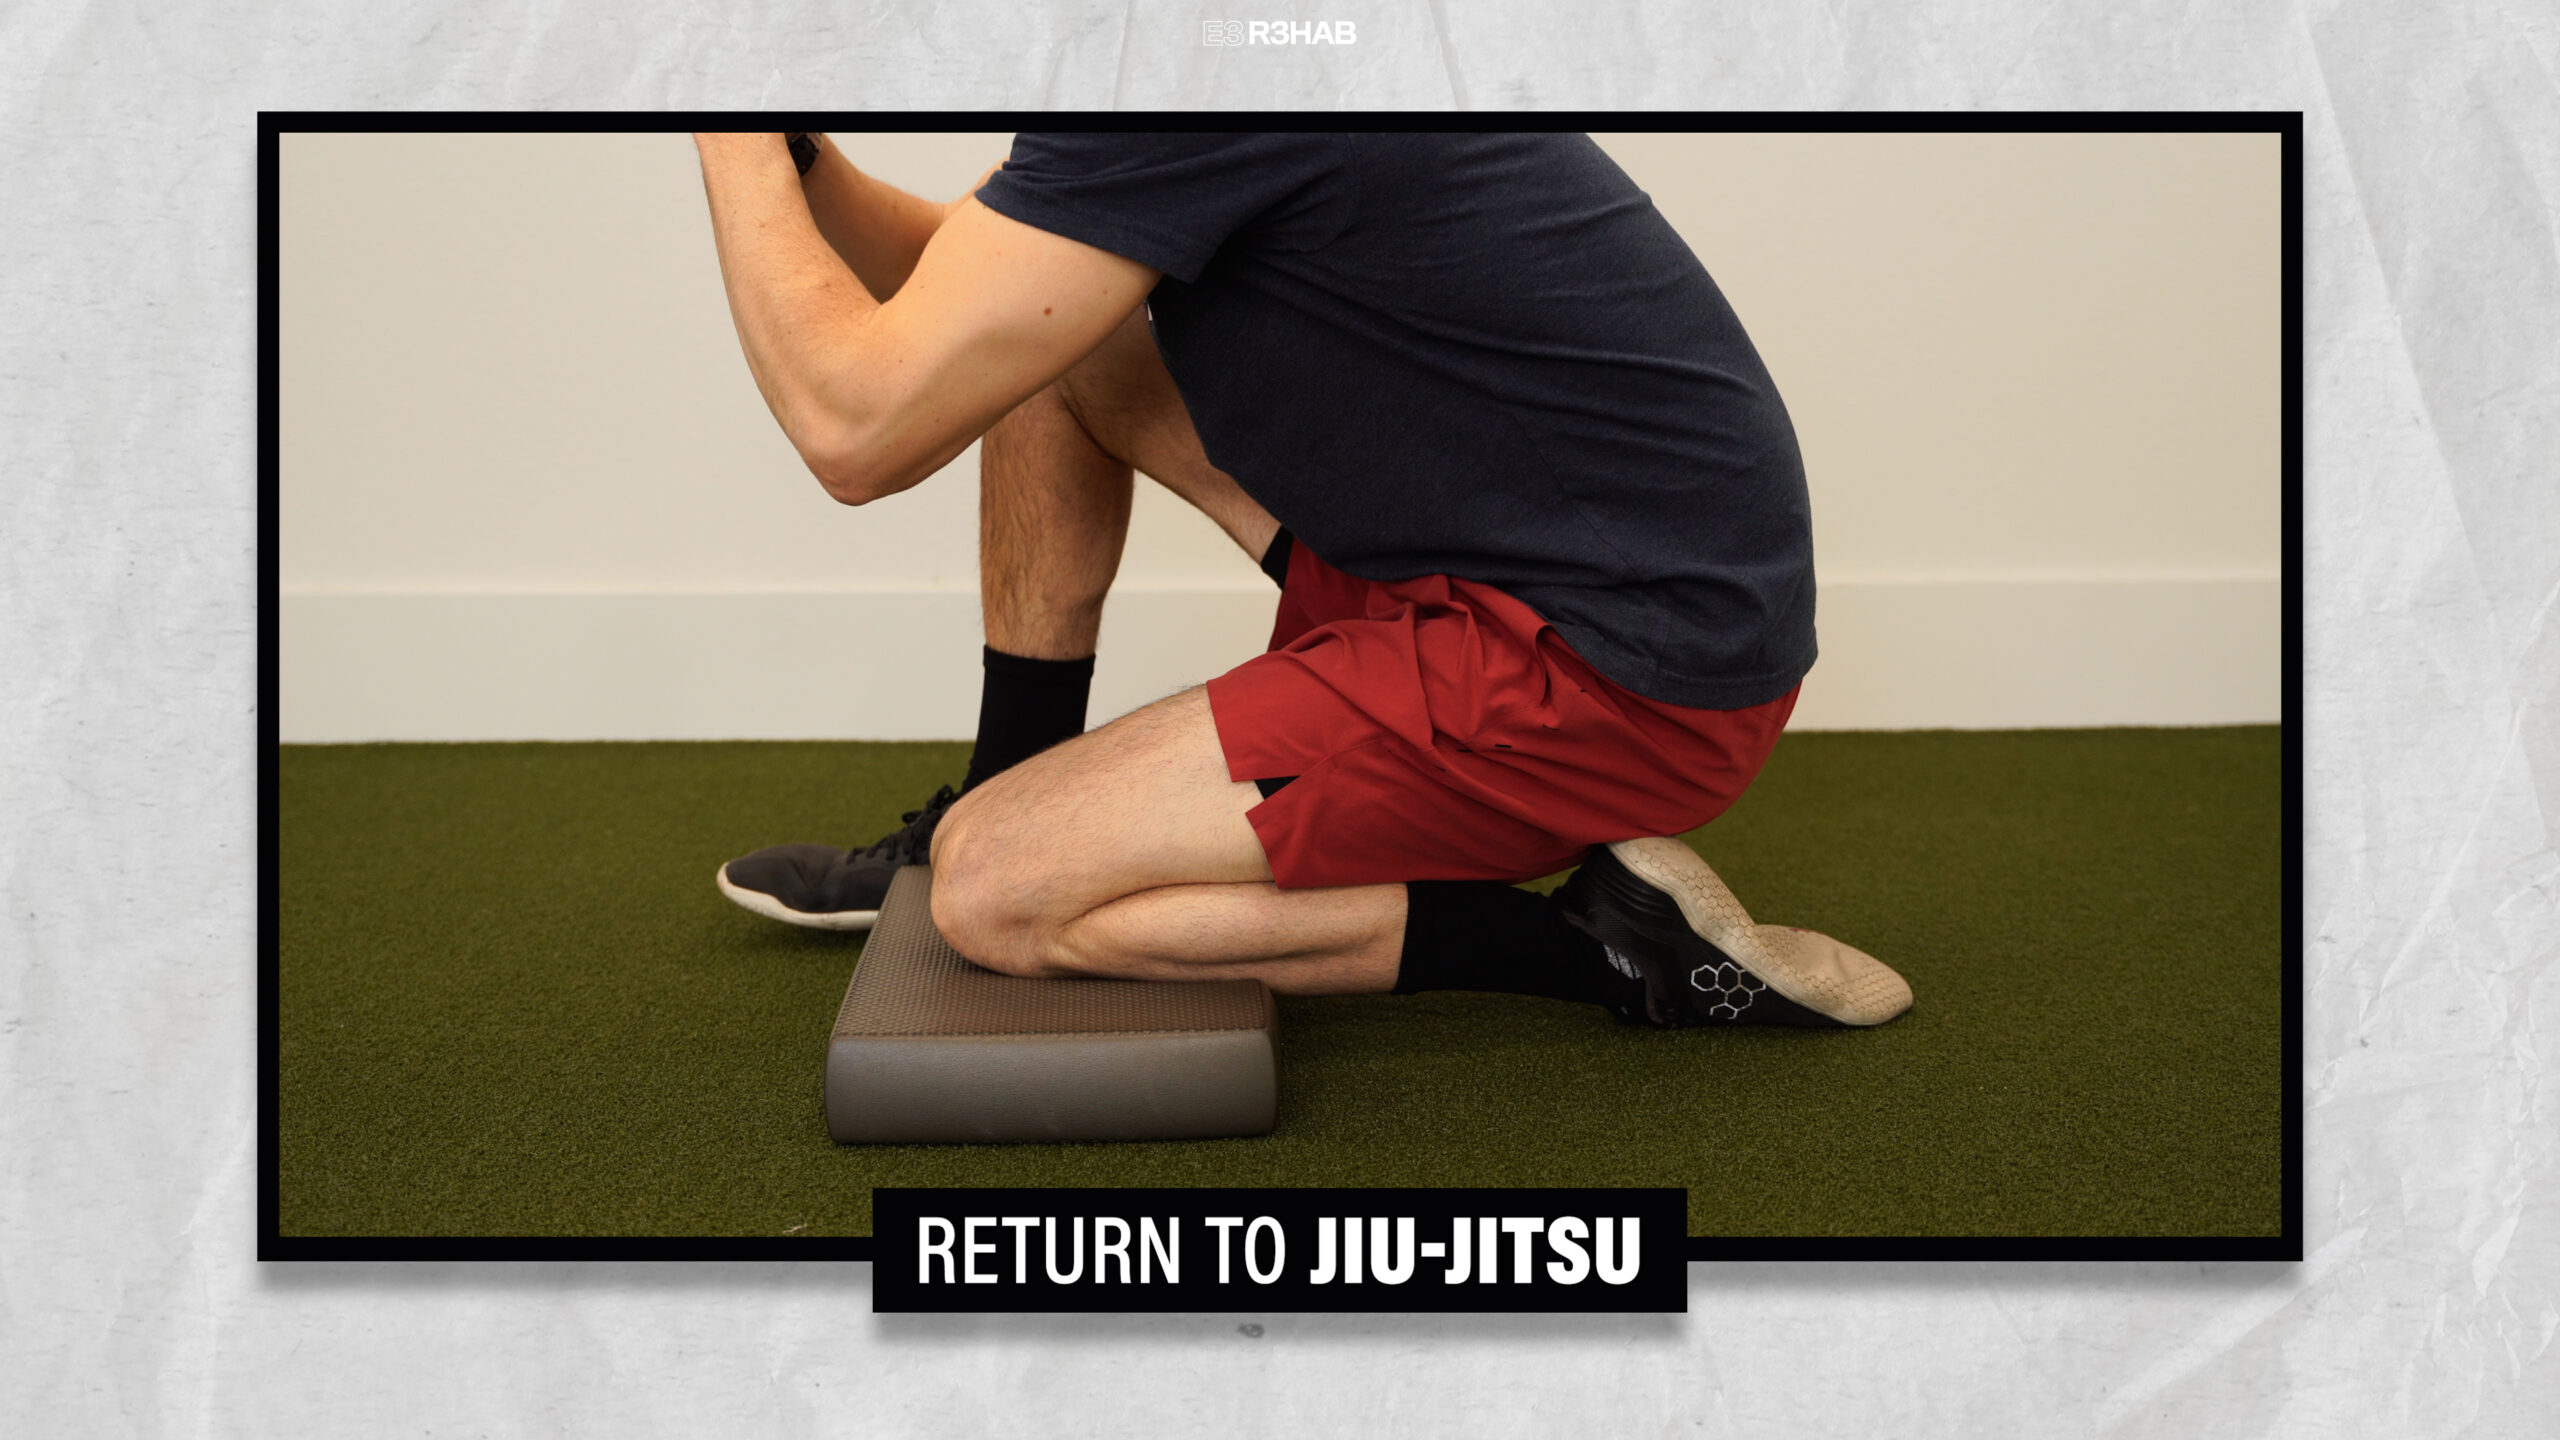 Improving Knee Flexion Range of Motion - E3 Rehab